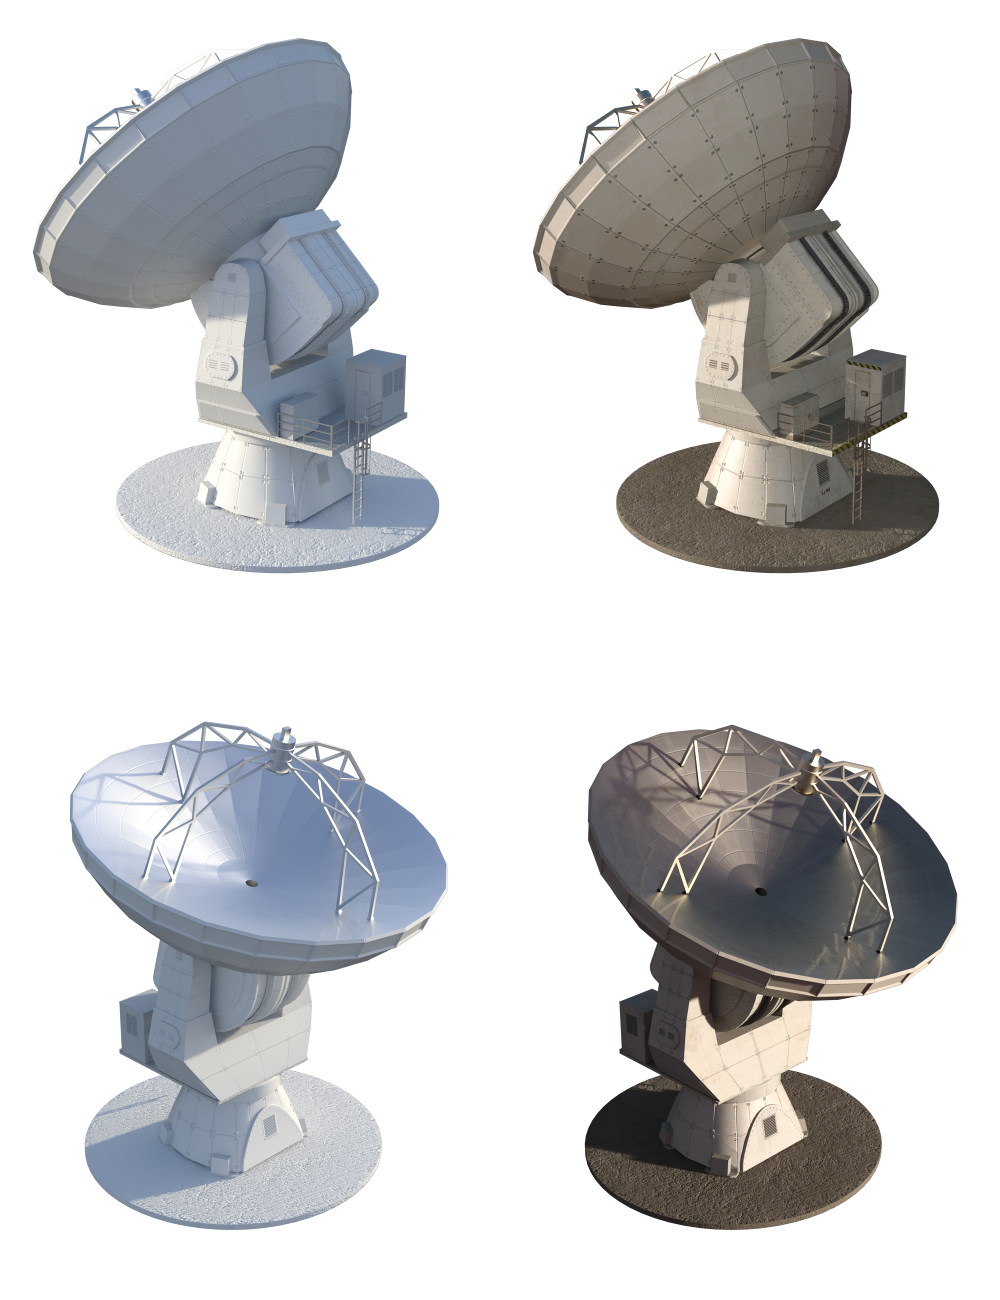 Radio Astronomy Telescope by: Inkara, 3D Models by Daz 3D